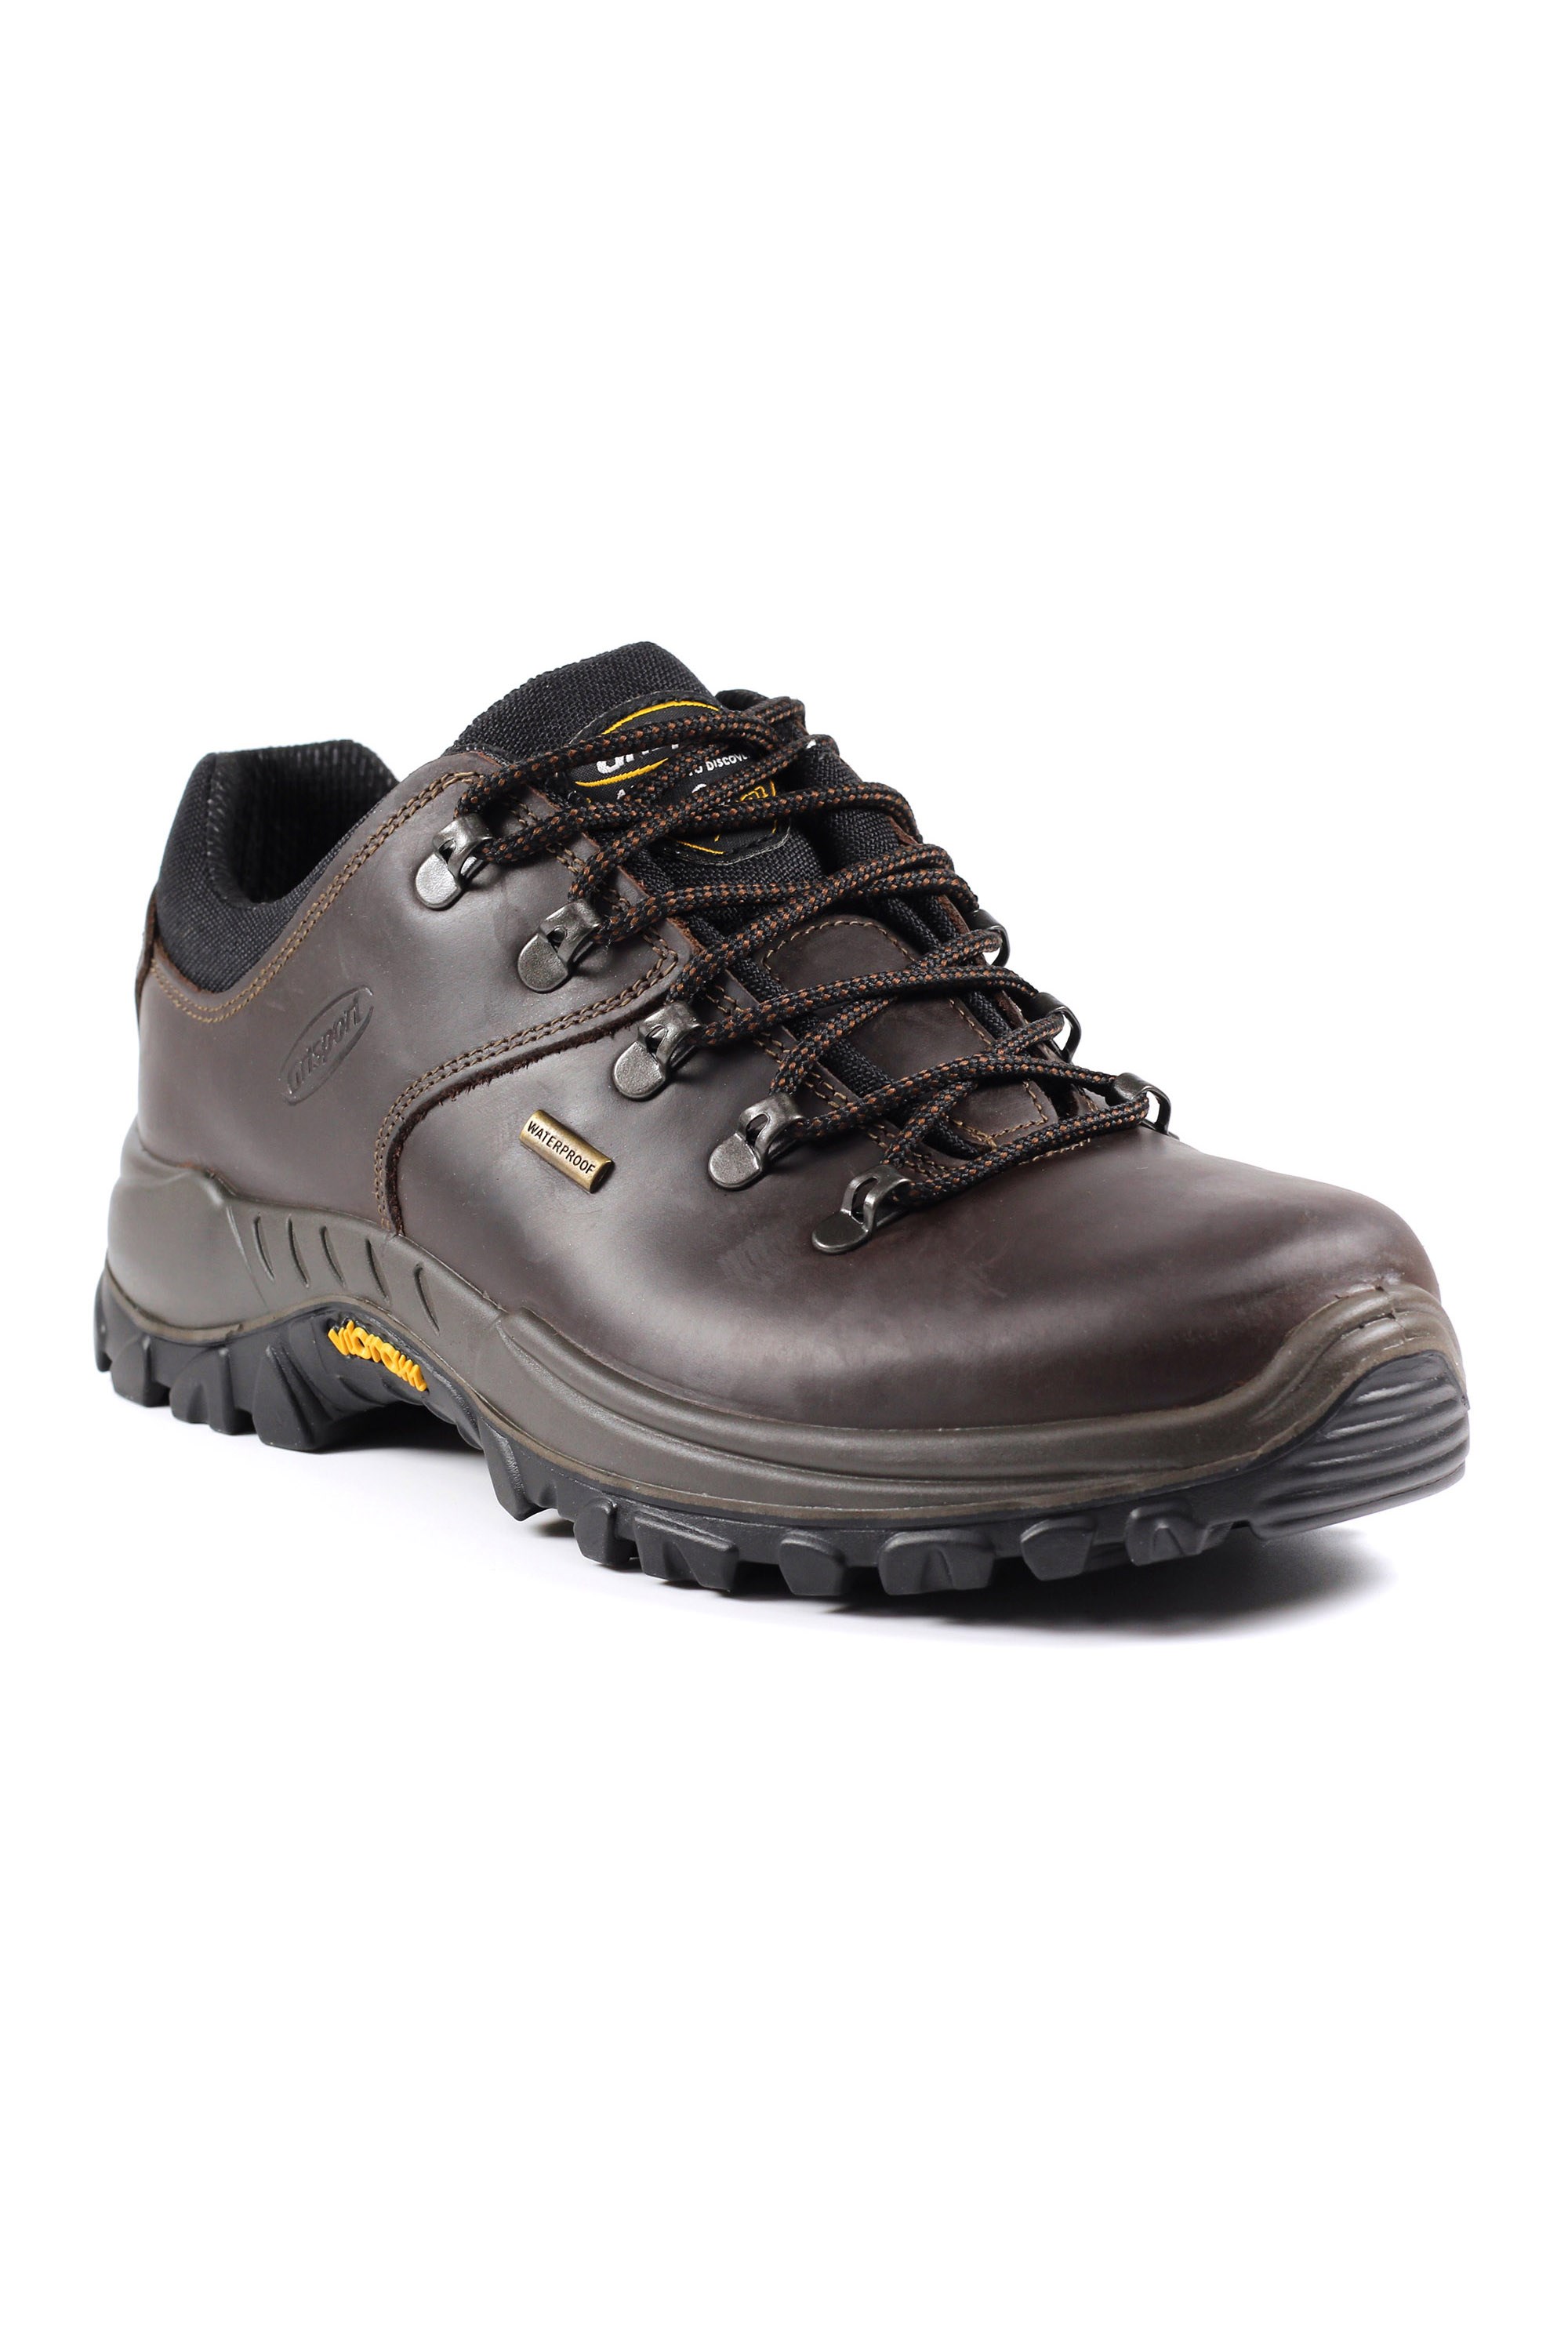 Dartmoor Mens Waterproof Walking Shoes -